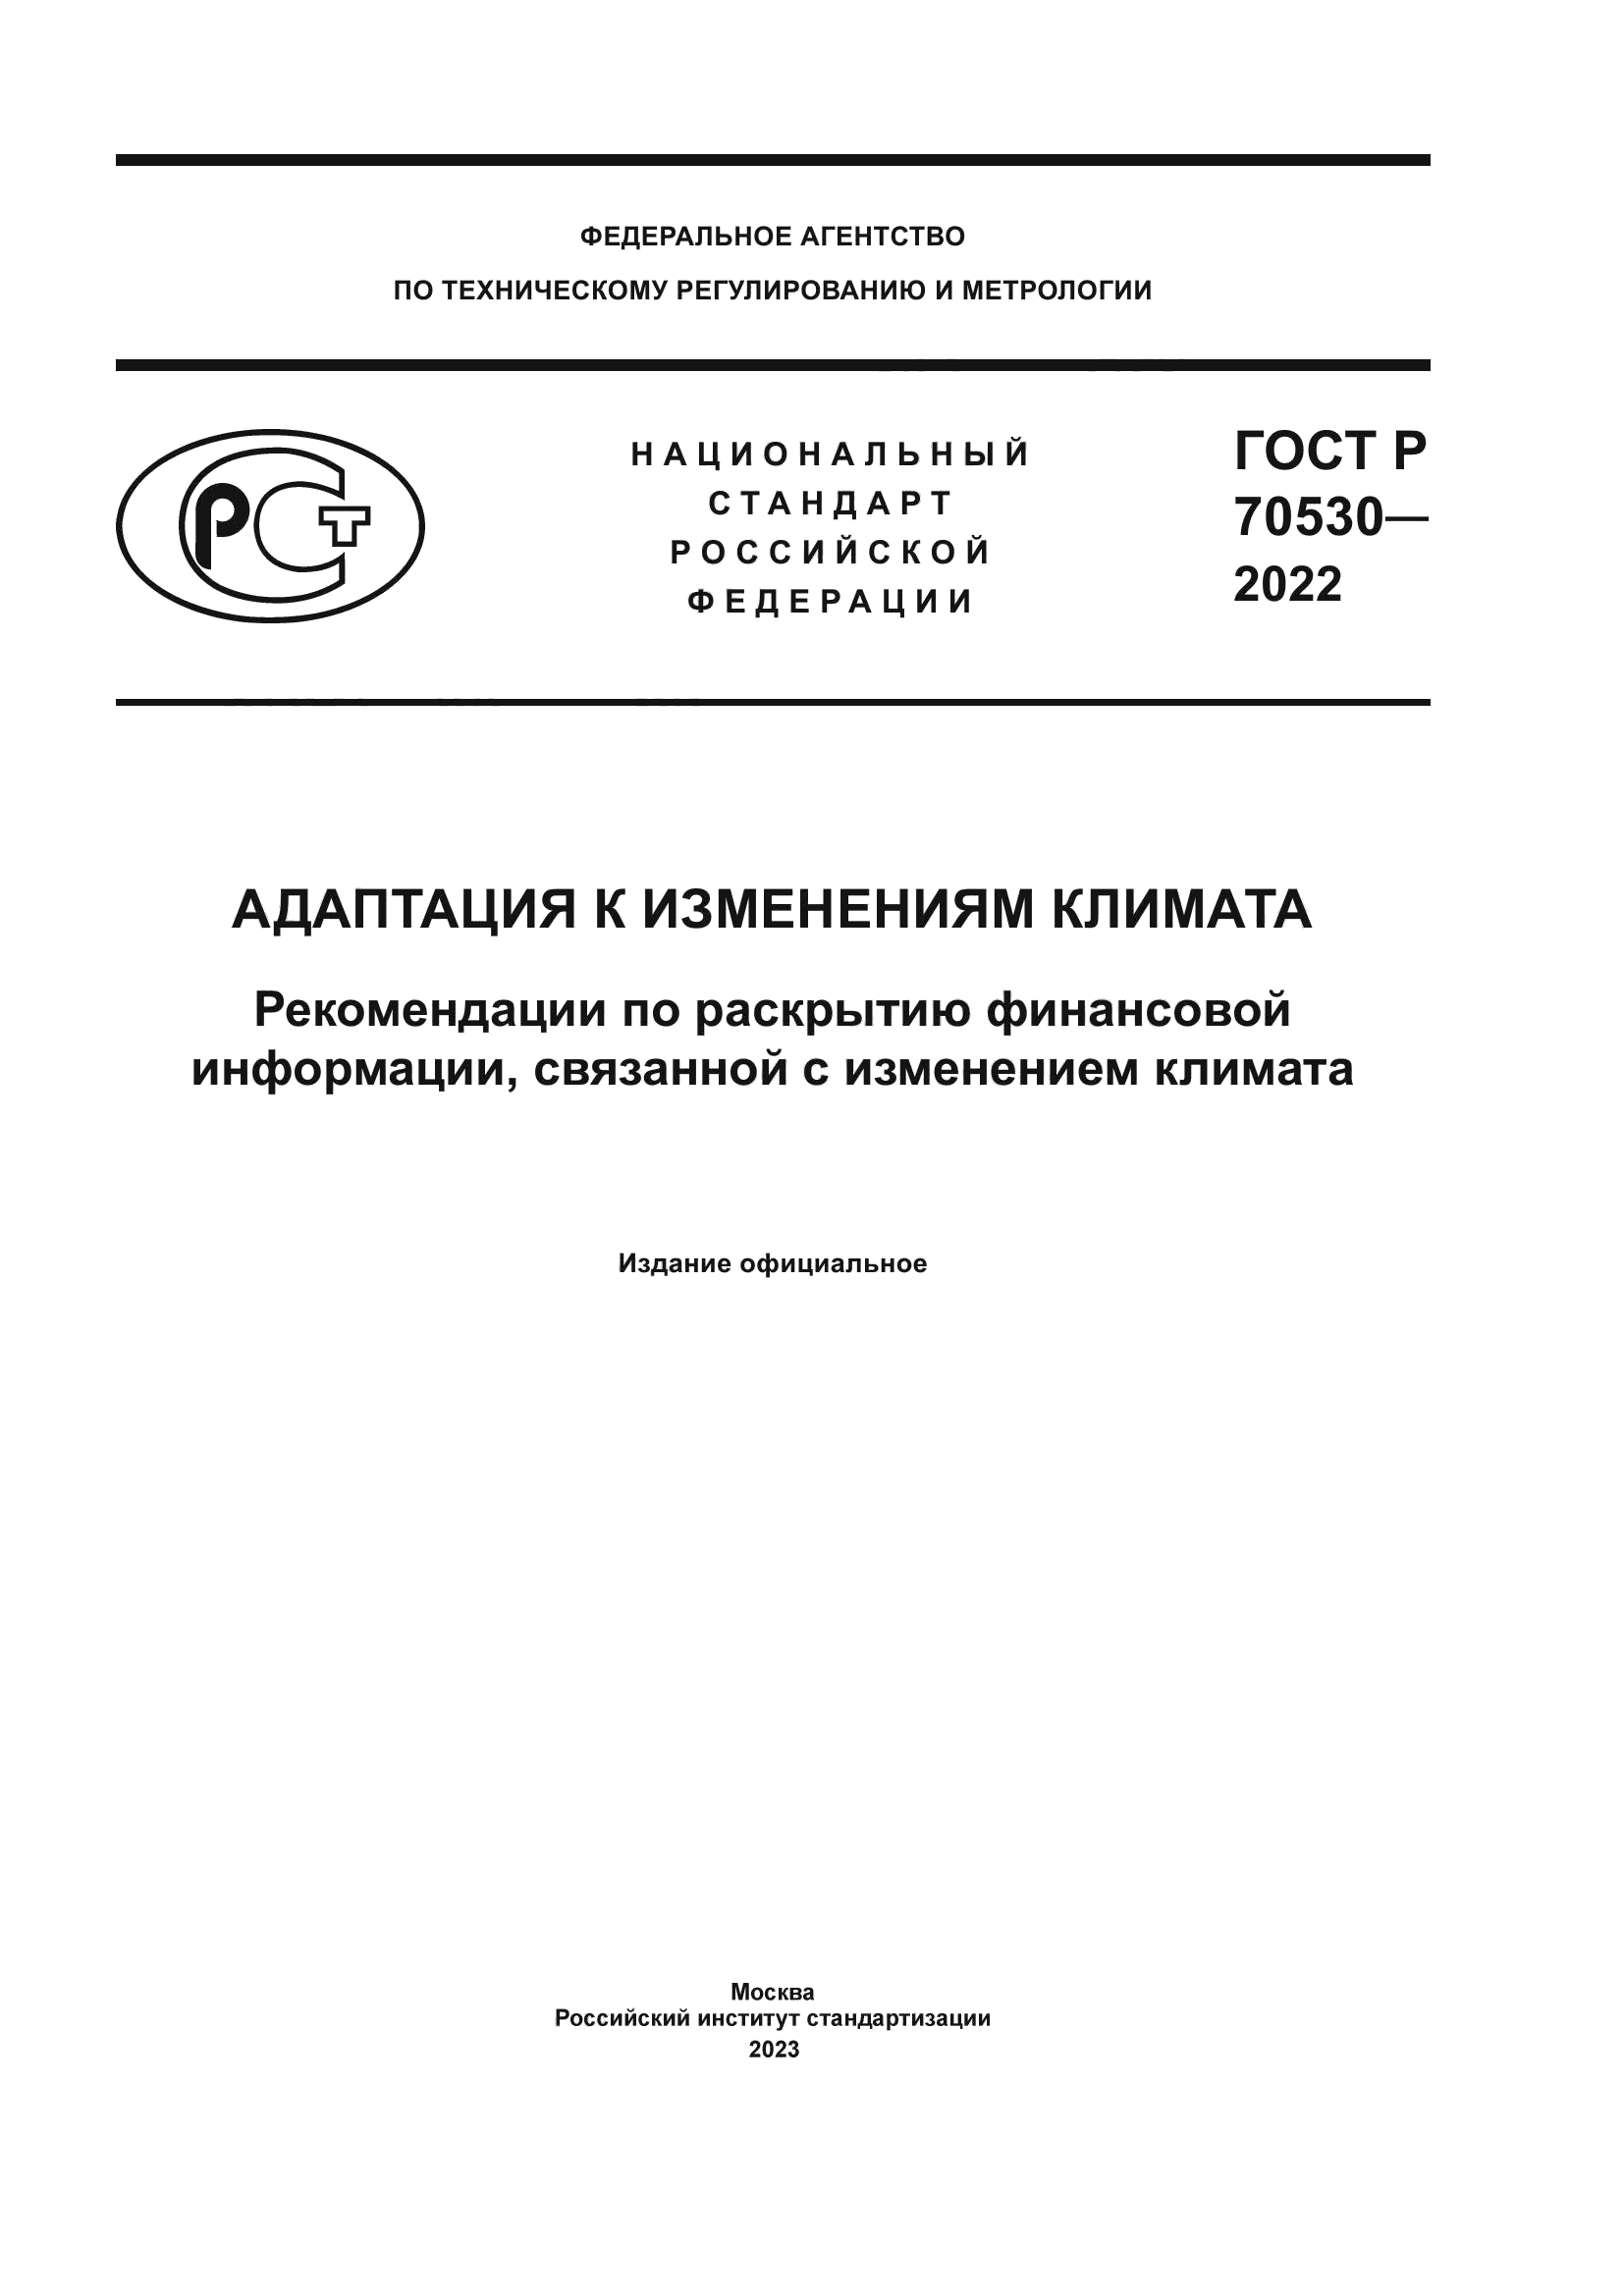 ГОСТ Р 70530-2022